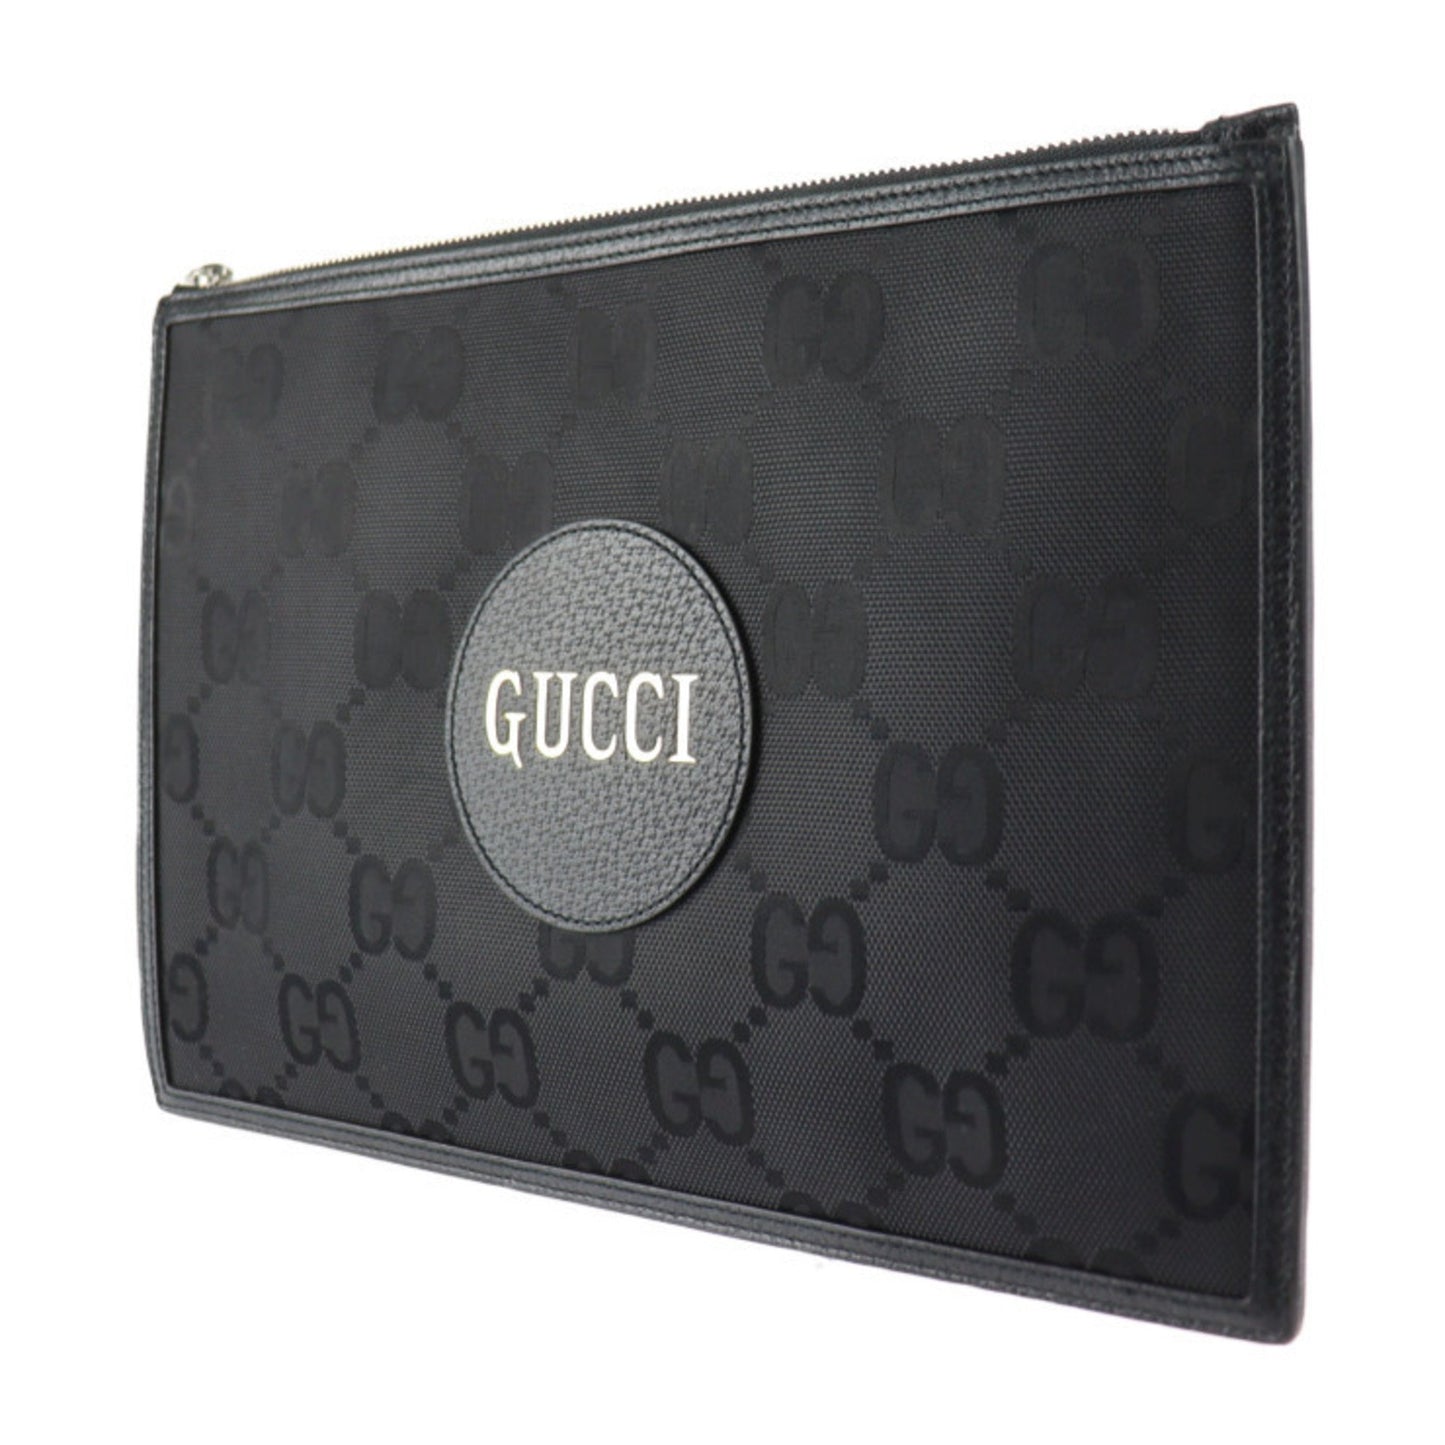 Gucci Men's Versatile Black Nylon Clutch Bag for Modern Men in Black